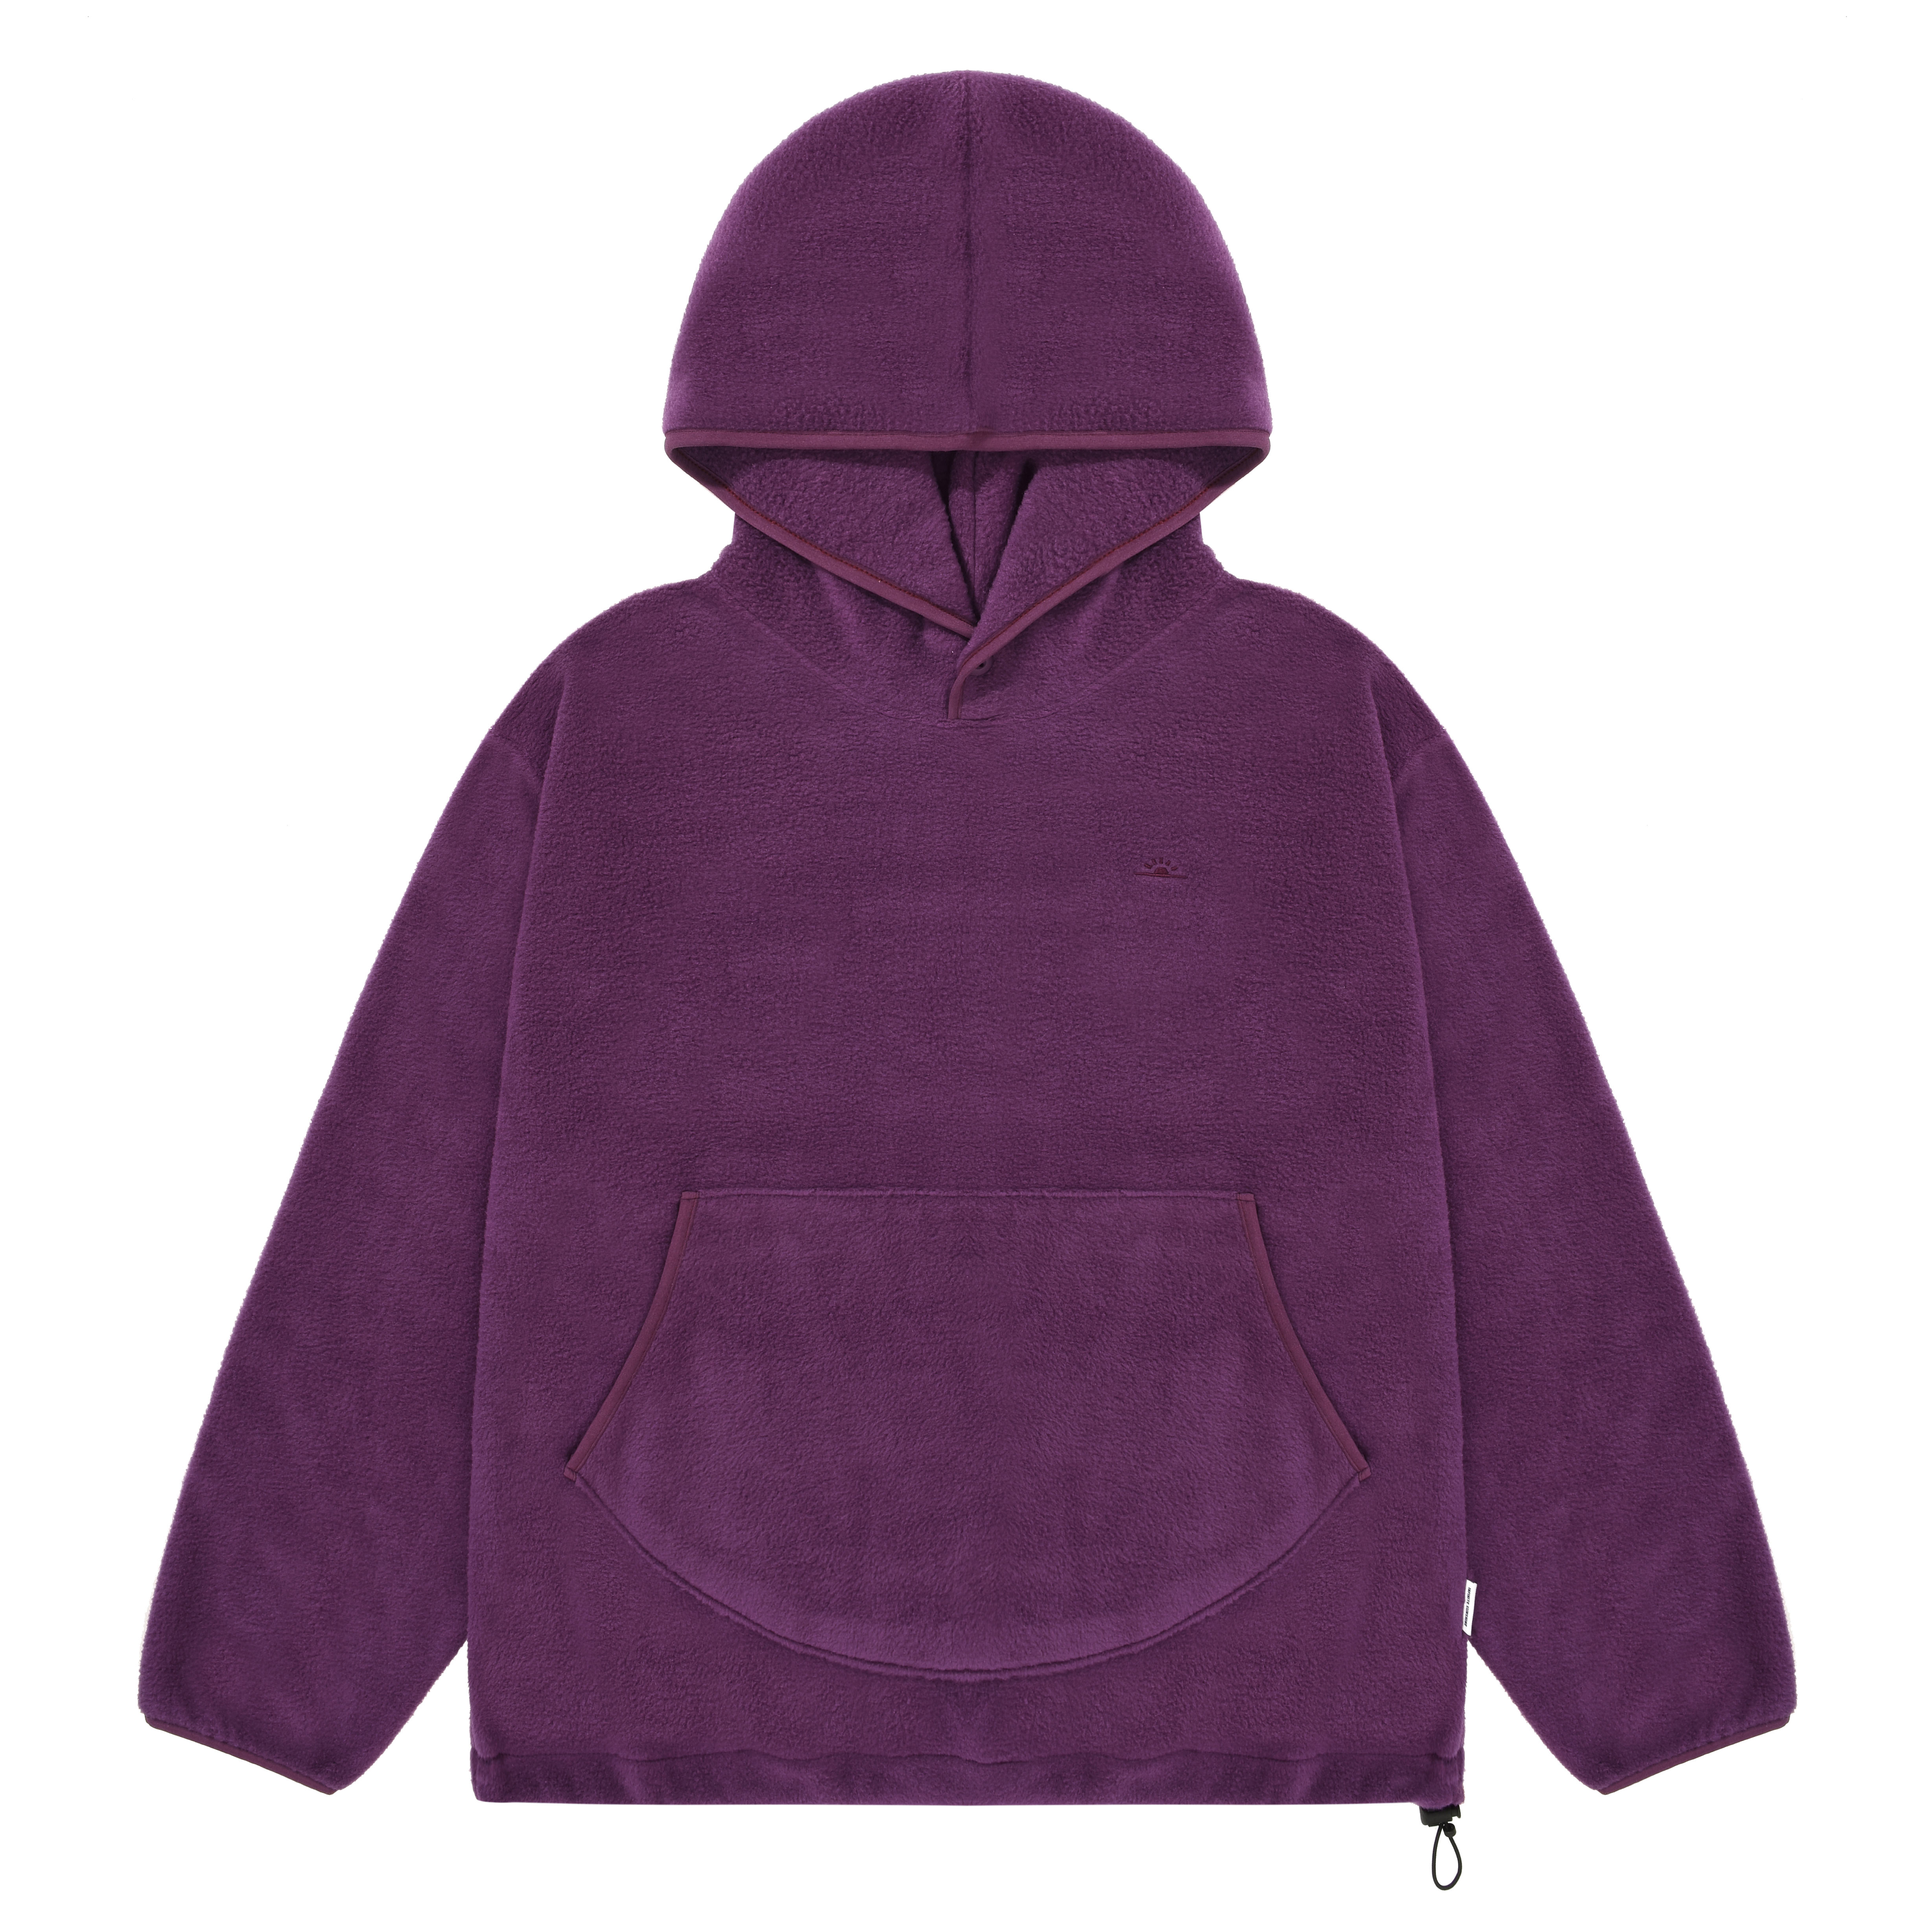 Sunrise fleece snap hoodie purple